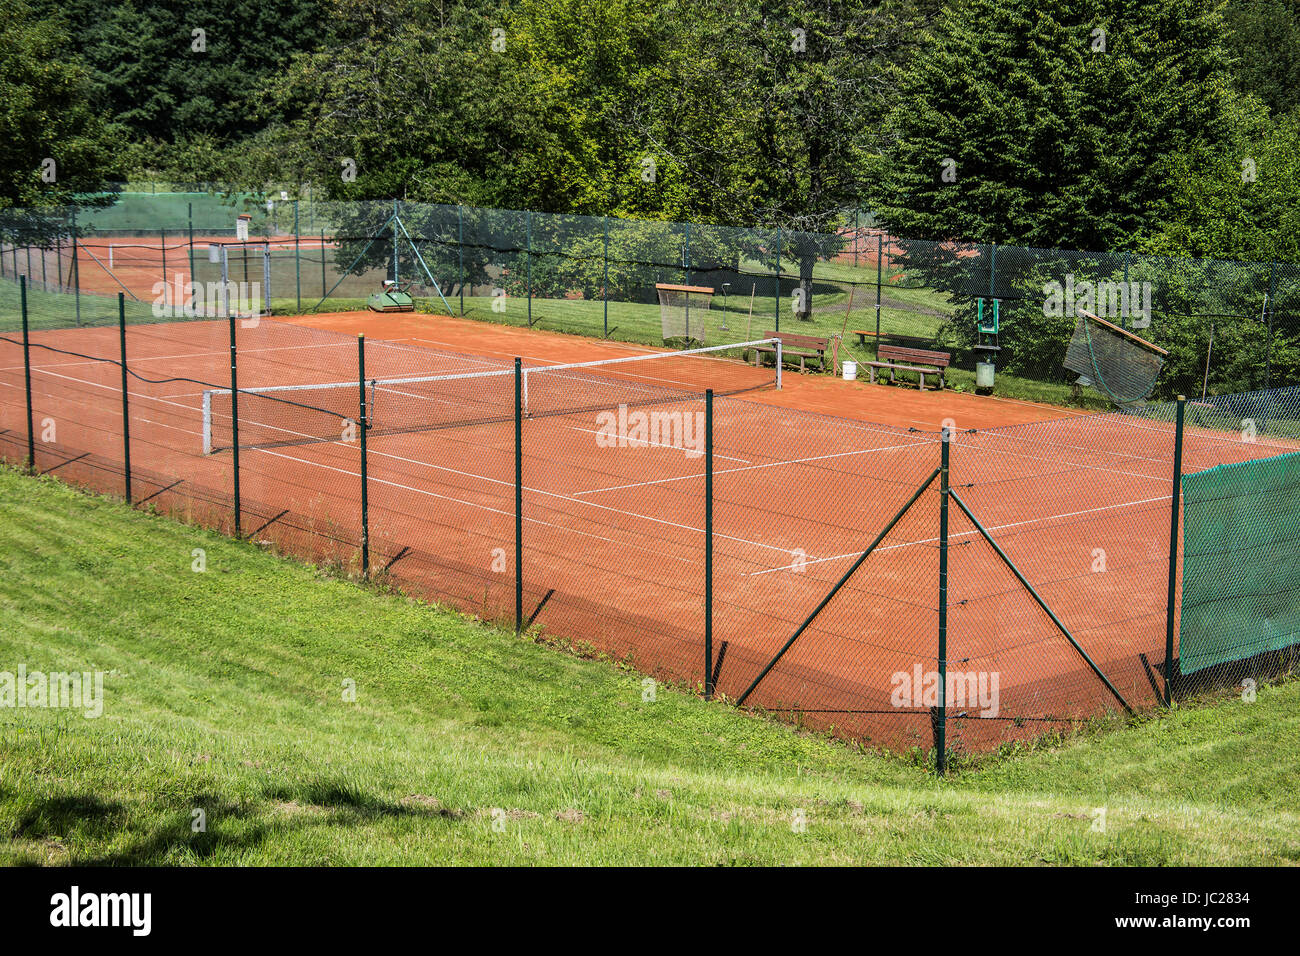 Tennisplatz auf rotem Sand Stock Photo - Alamy